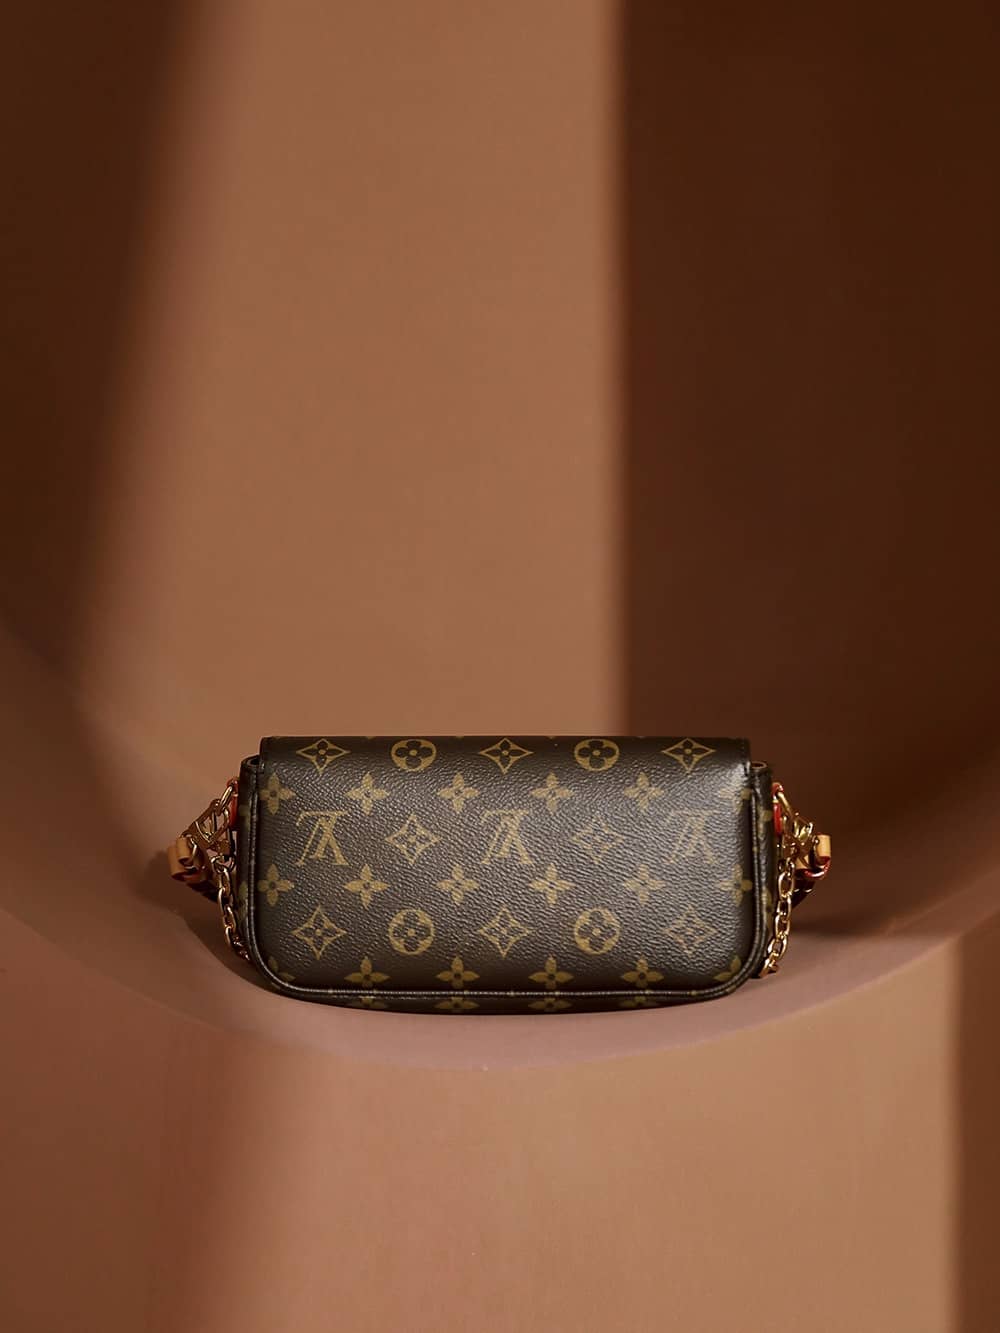 Louis Vuitton M81911 Wallet on Chain